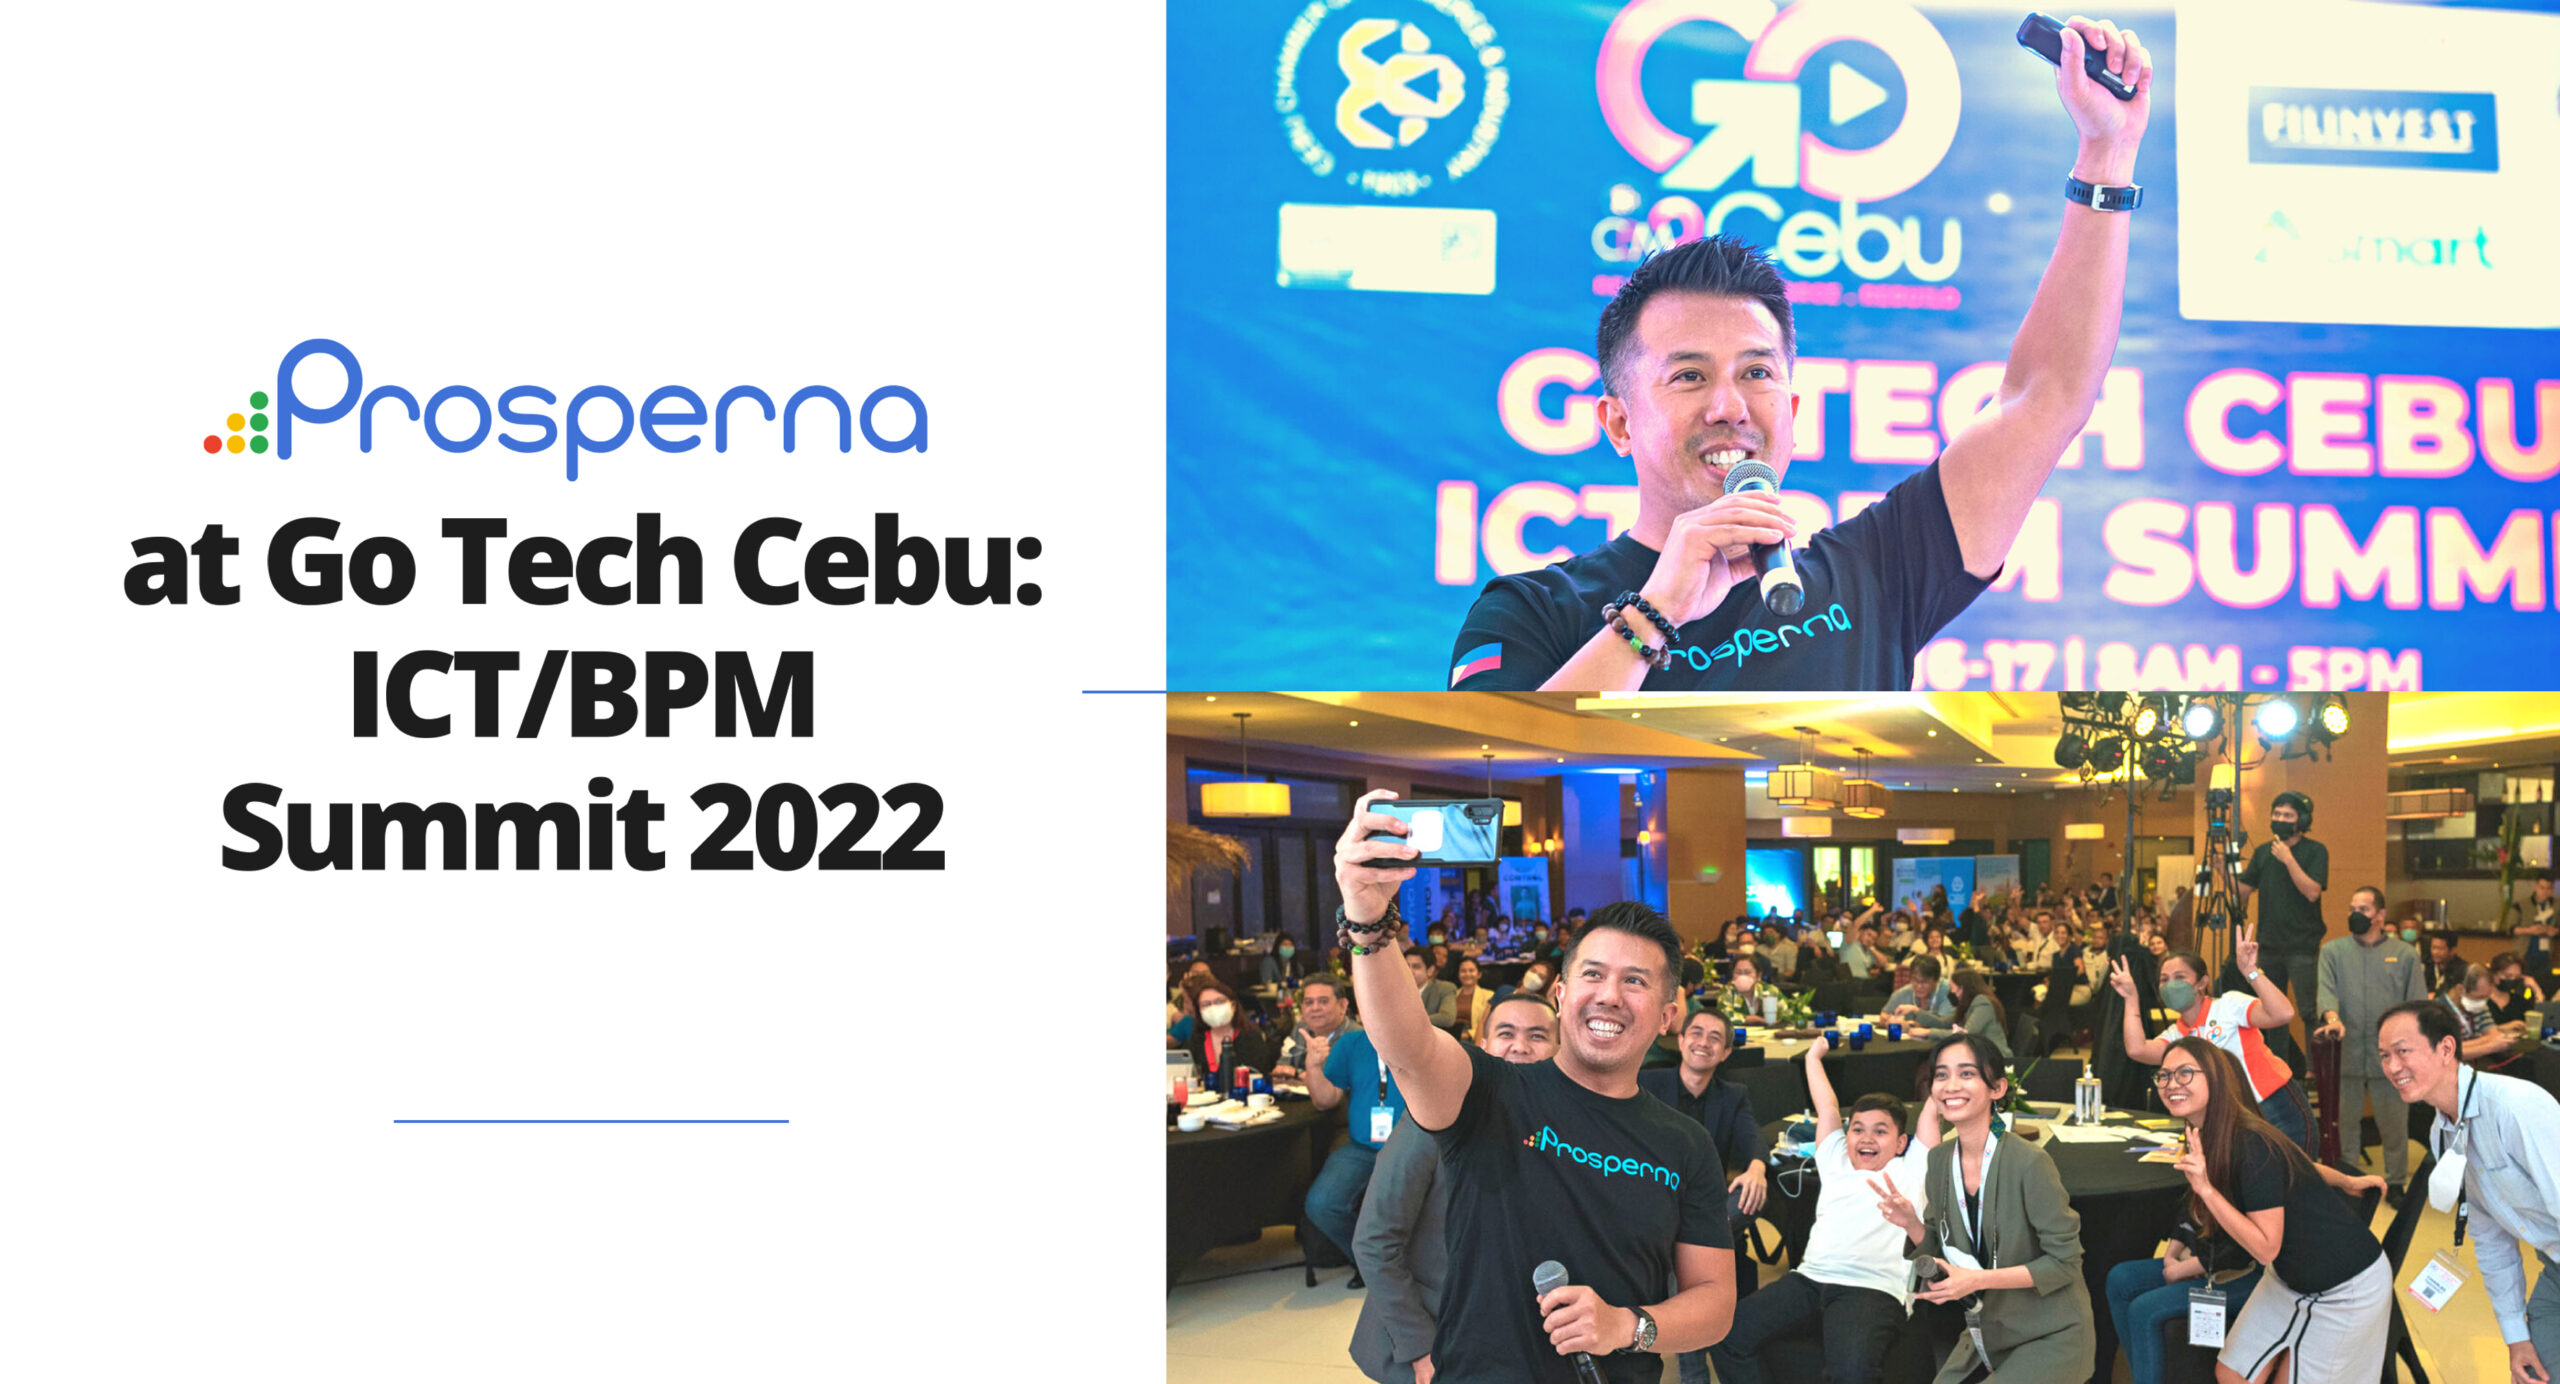 Prosperna at Go Tech Cebu: ICT/BPM Summit 2022